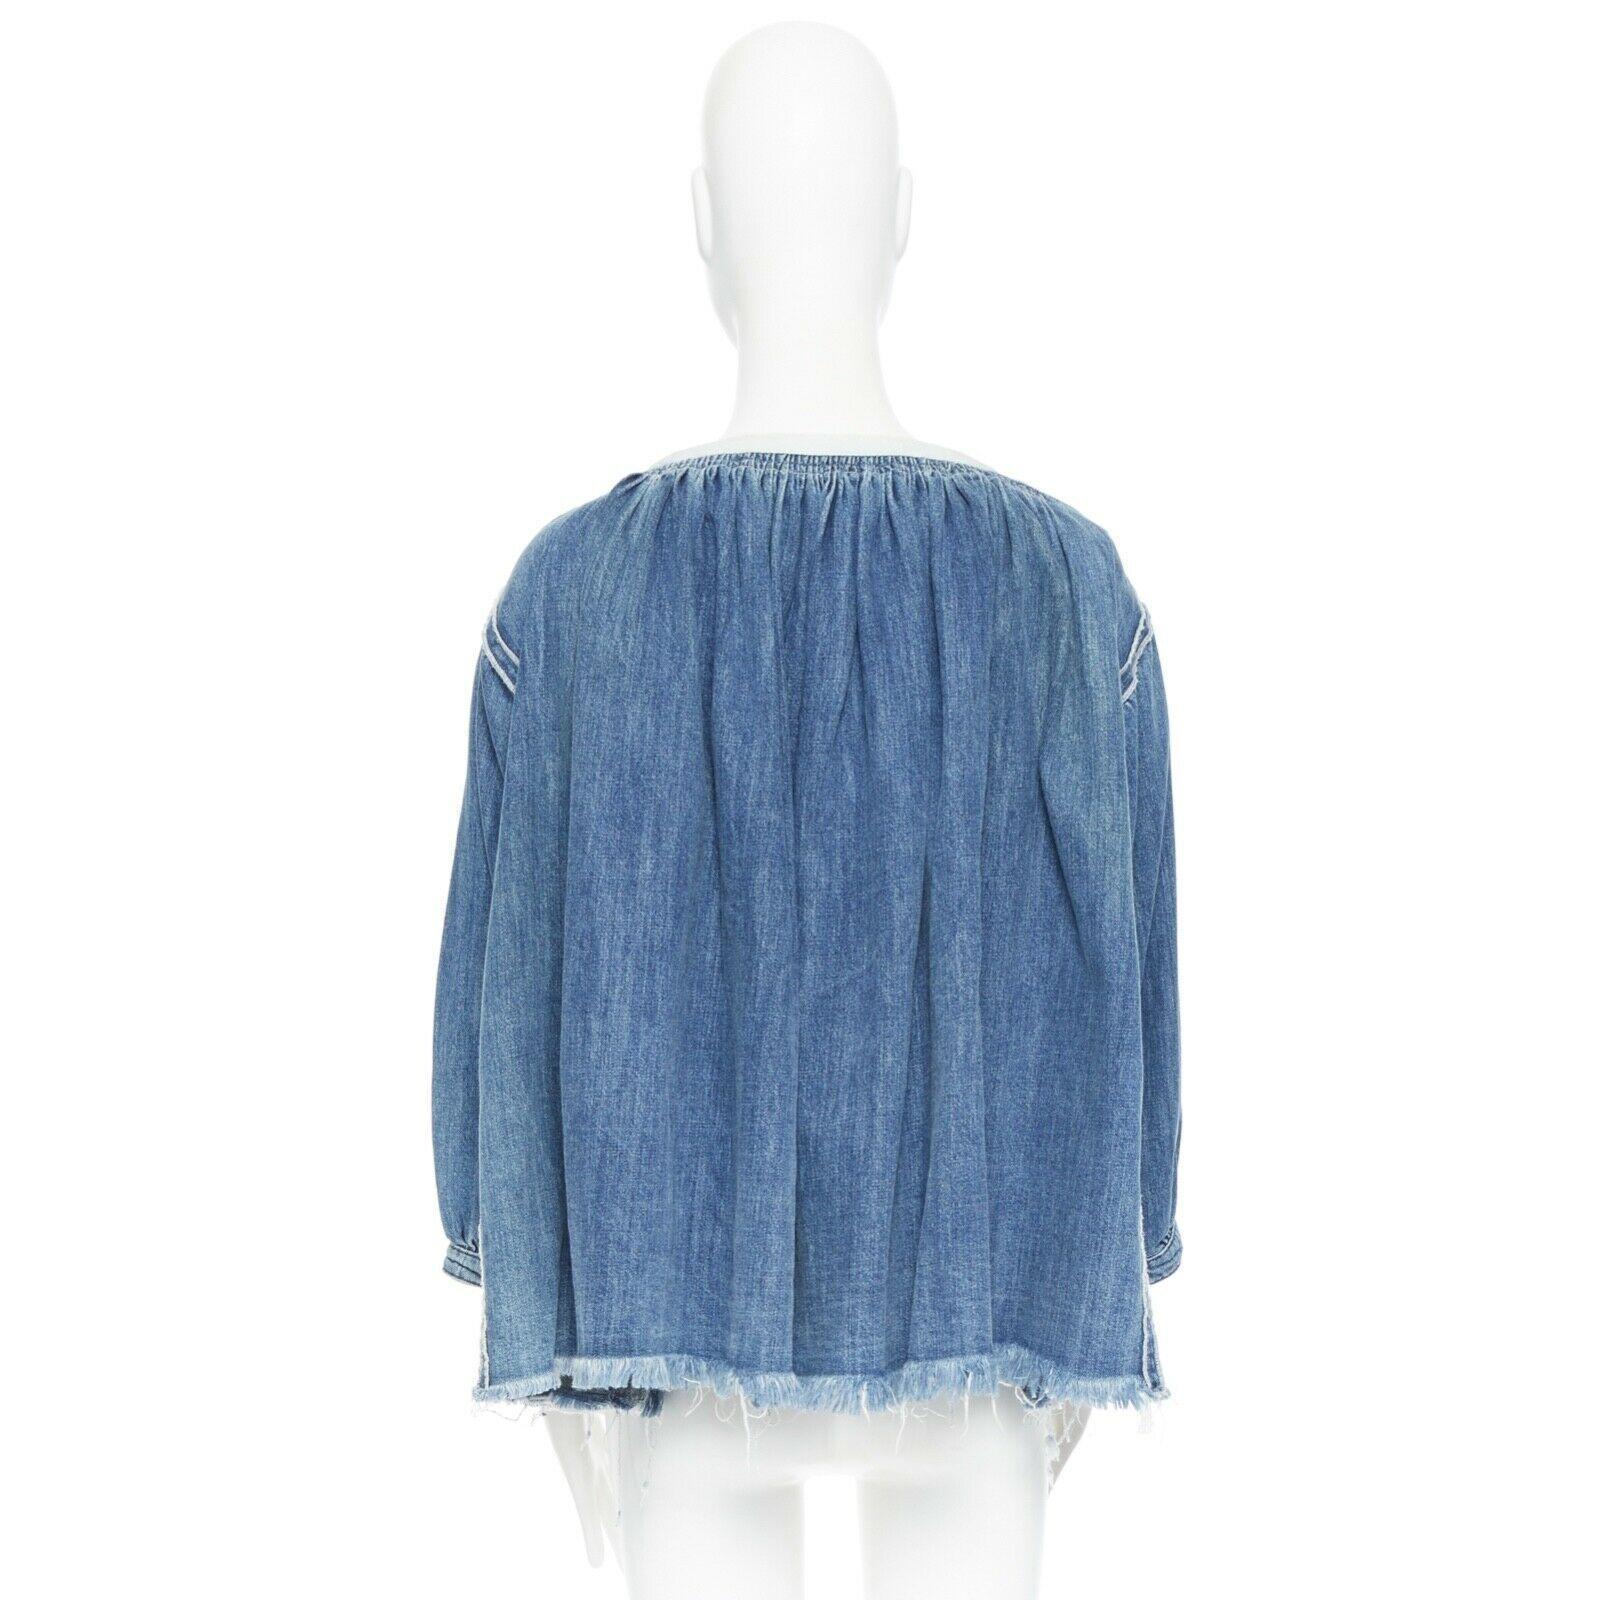 CHLOE 2016 blue denim blouse a-line baby doll top smocked frayed bohemian FR36 S 2